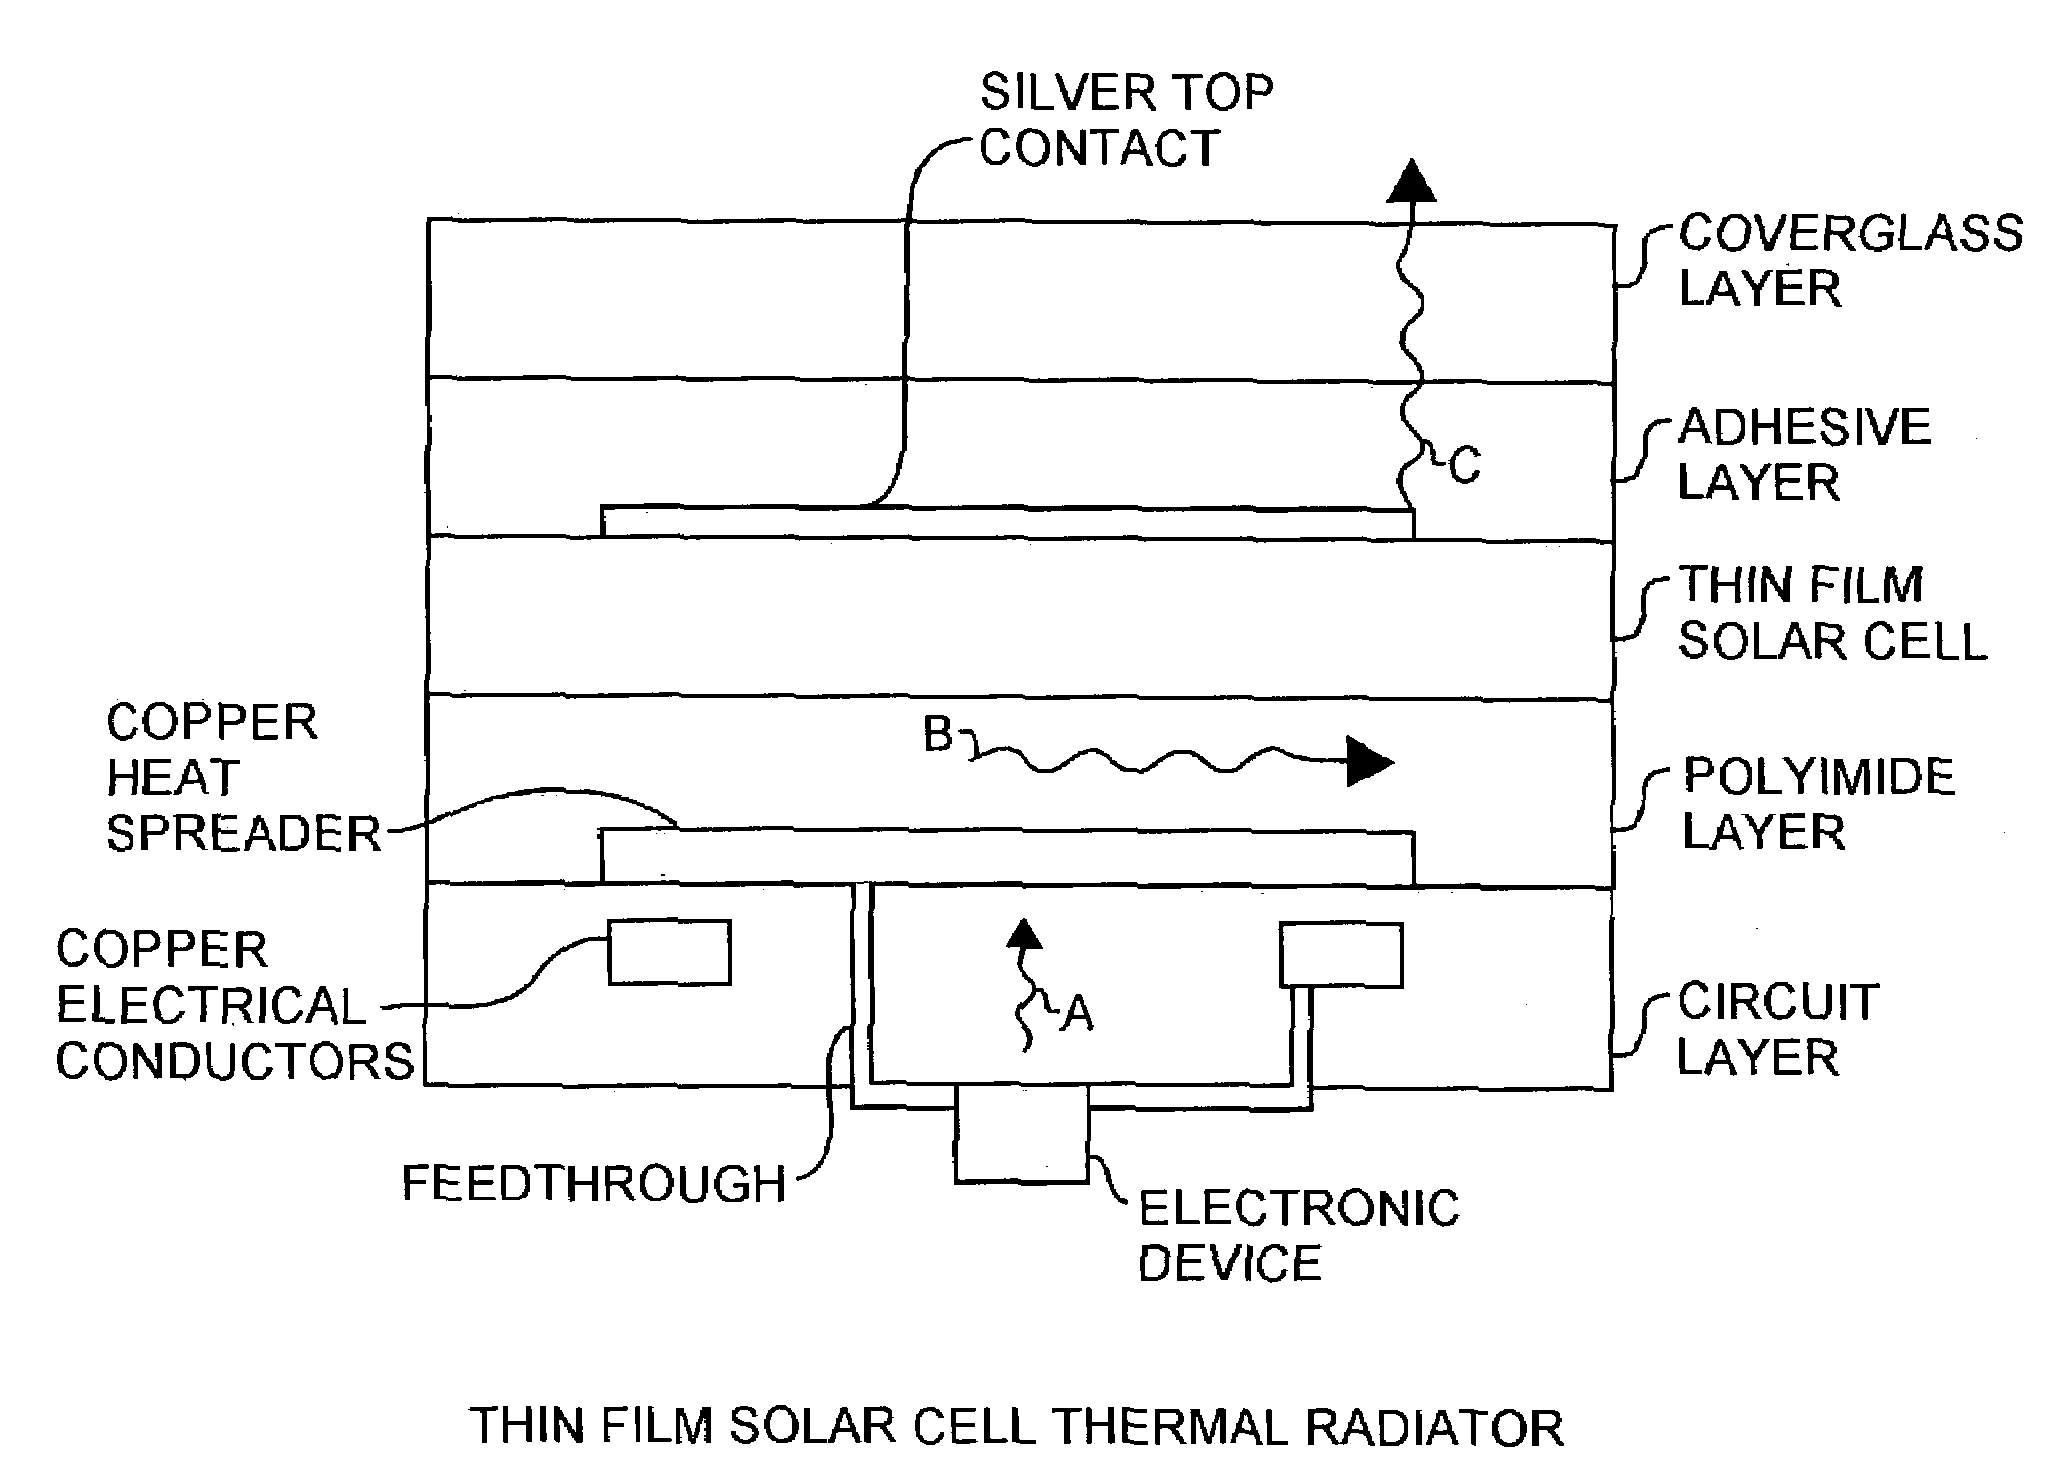 Thin film solar cell thermal radiator